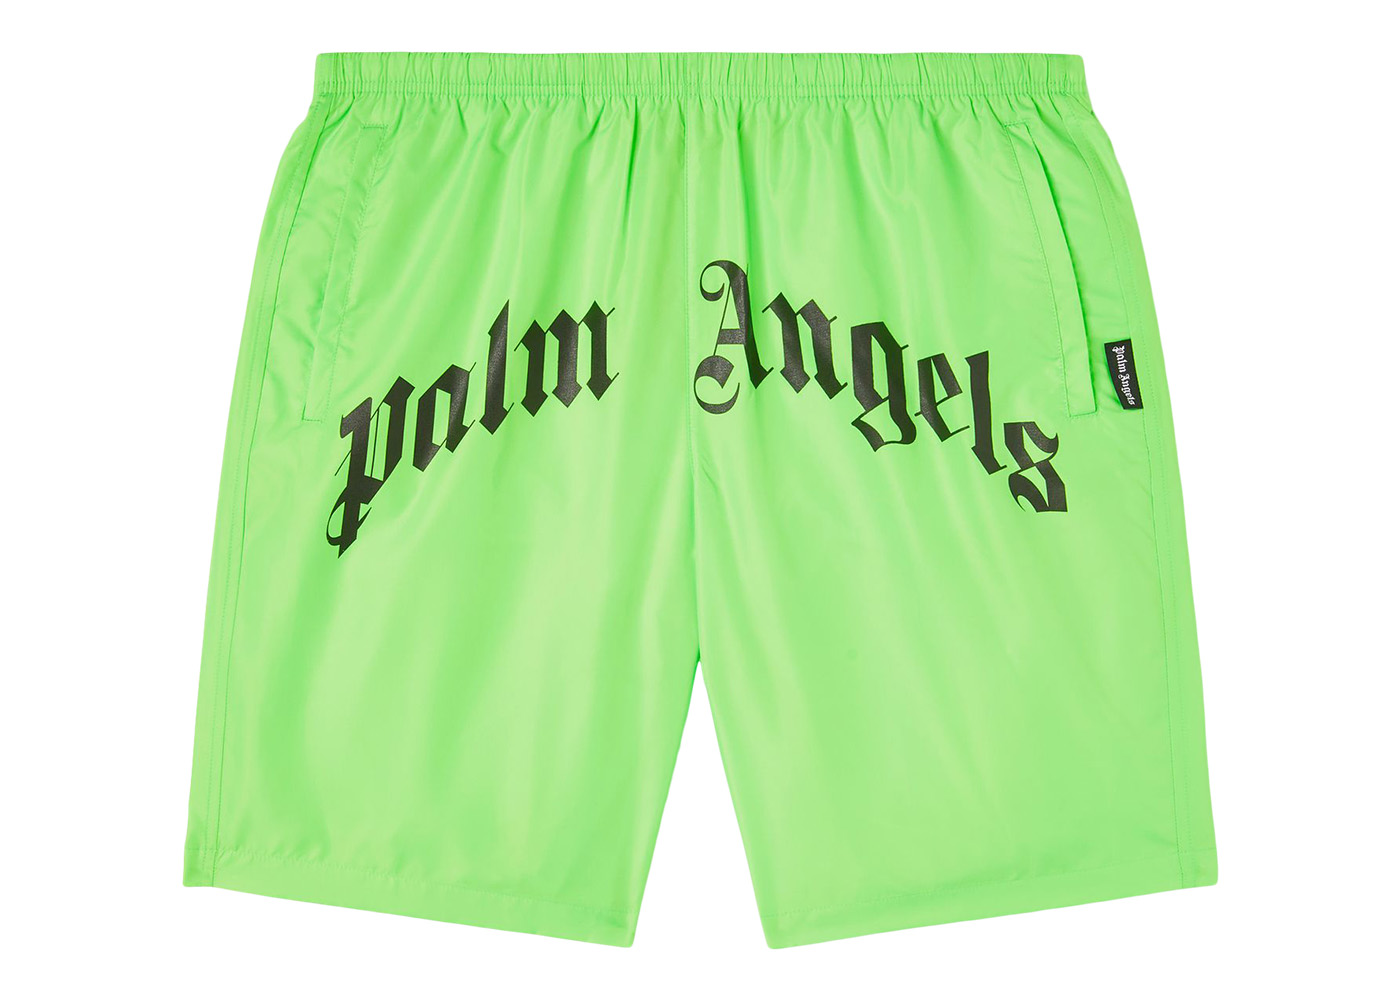 Palm Angels Kids palm-tree cycling shorts - Green